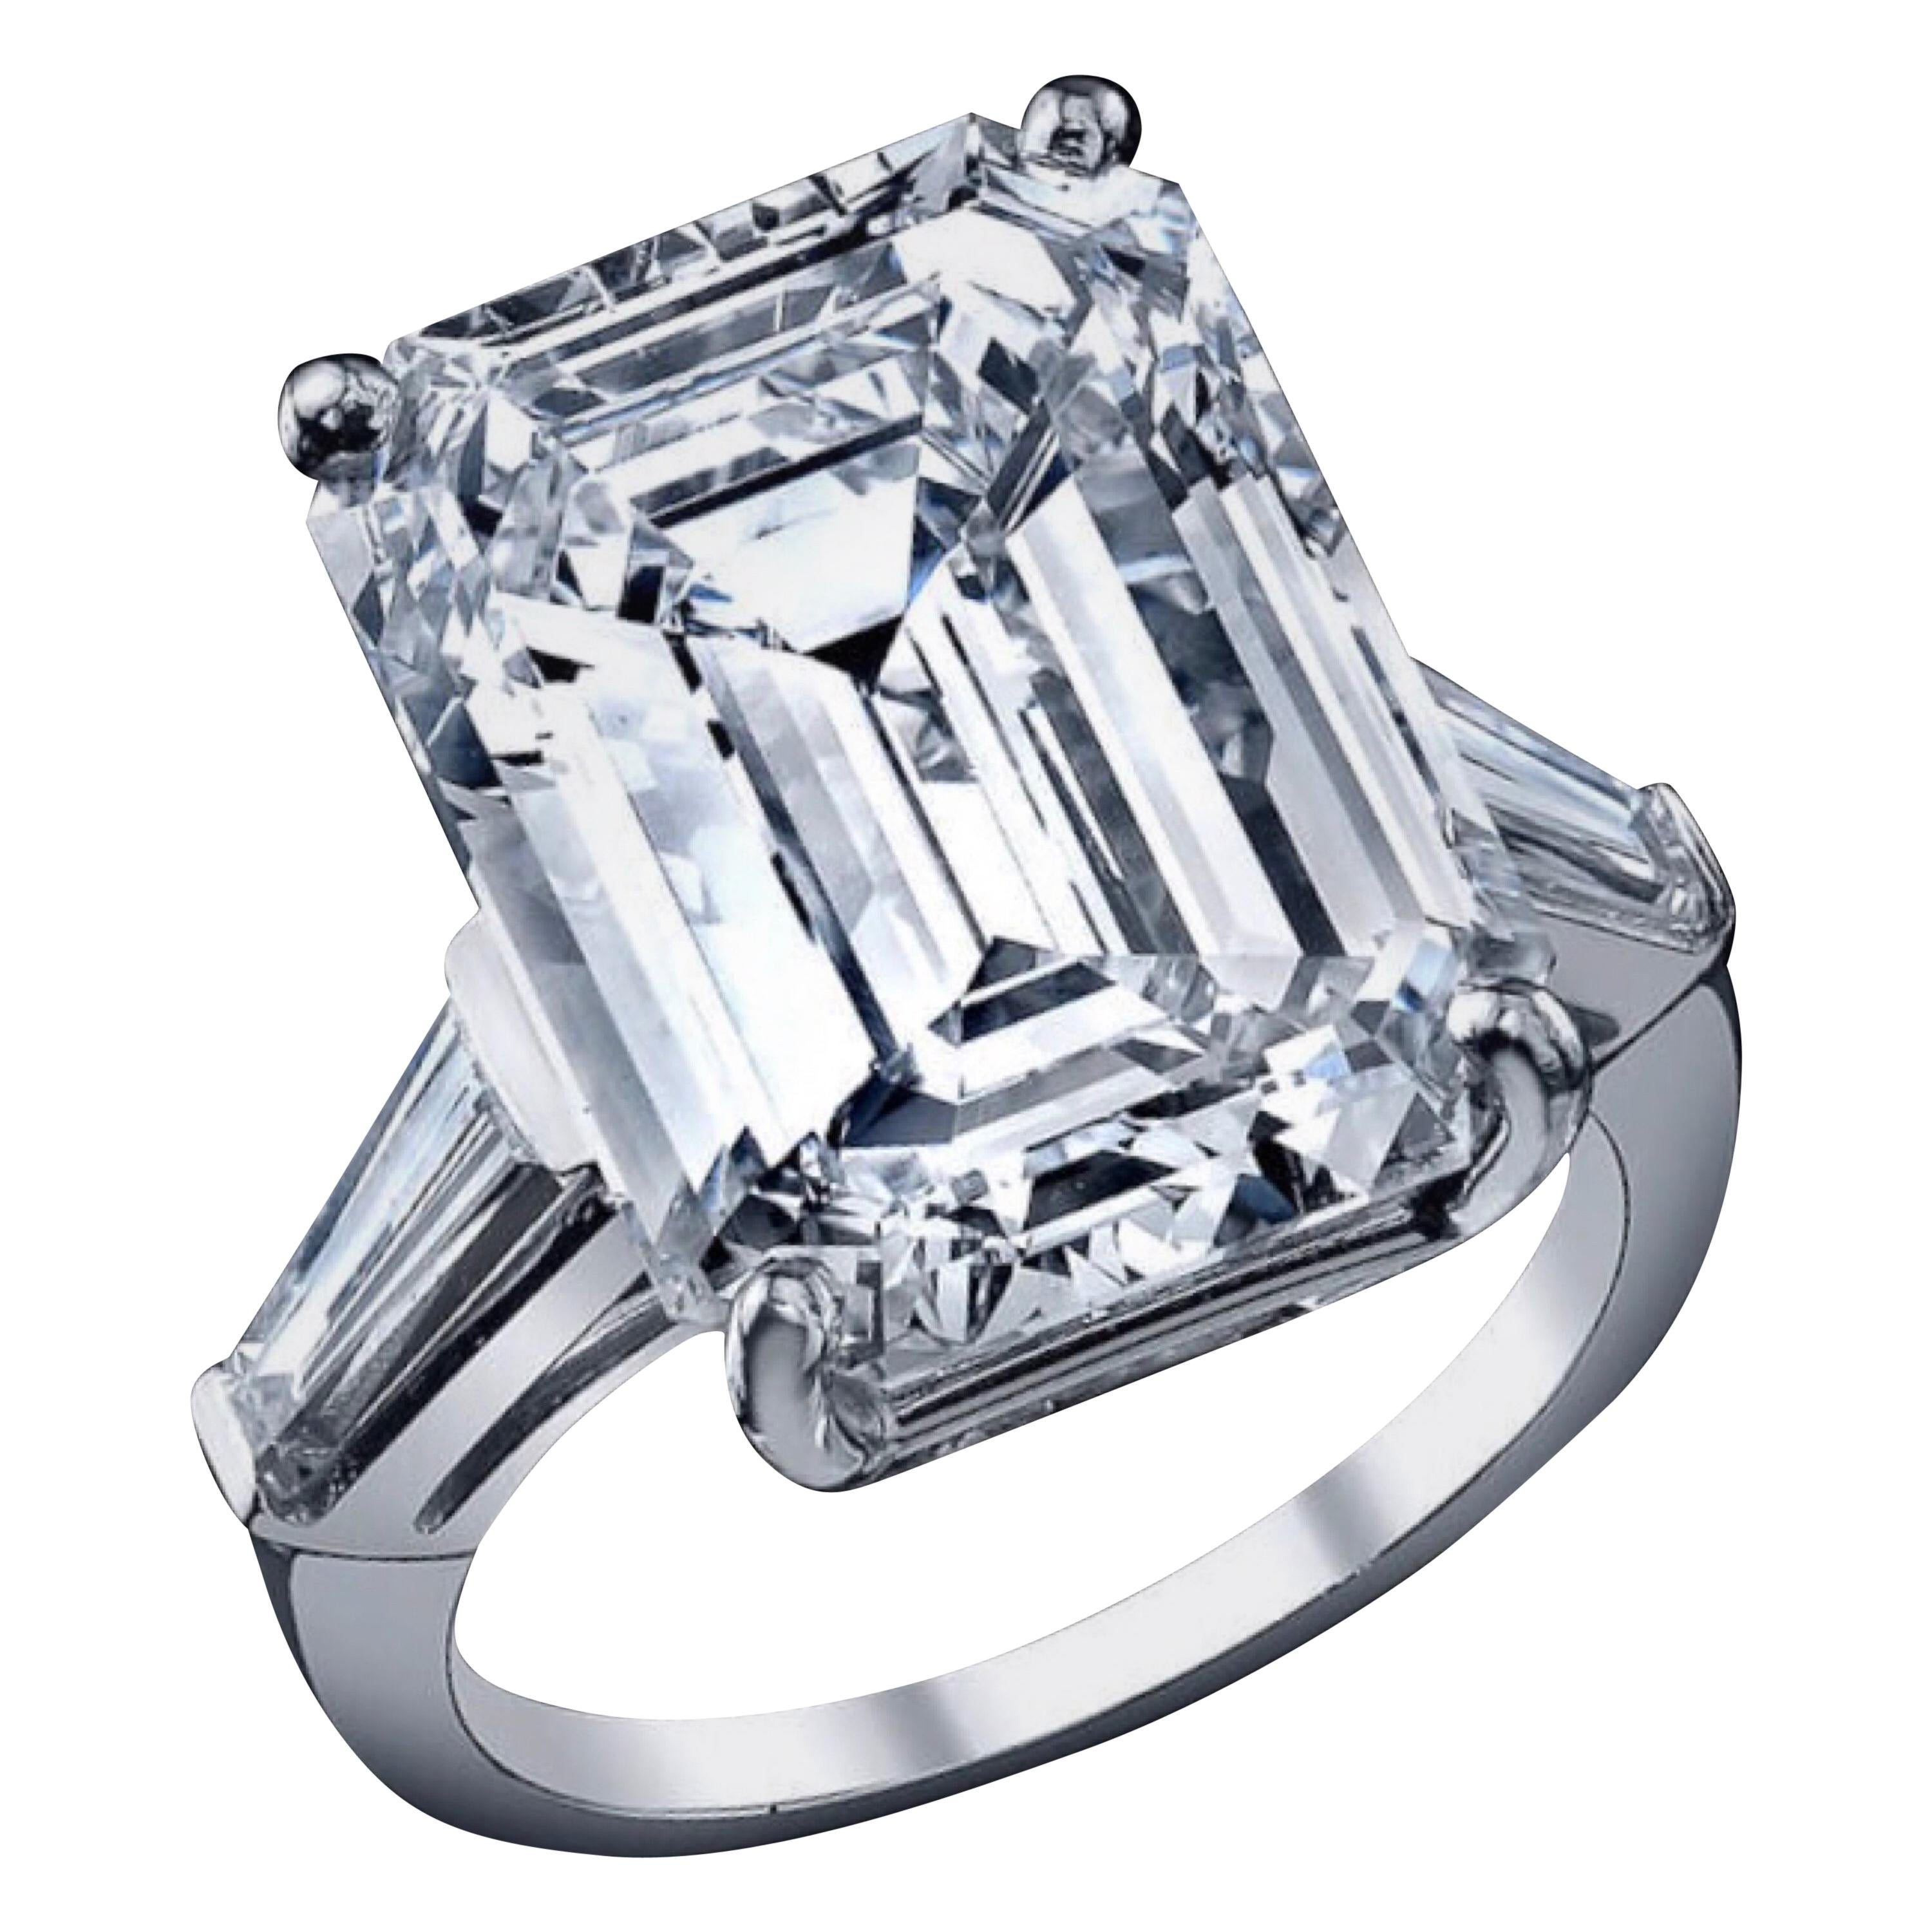 Emilio Jewelry GIA Certified 10 Carat Internally Flawless Diamond Ring